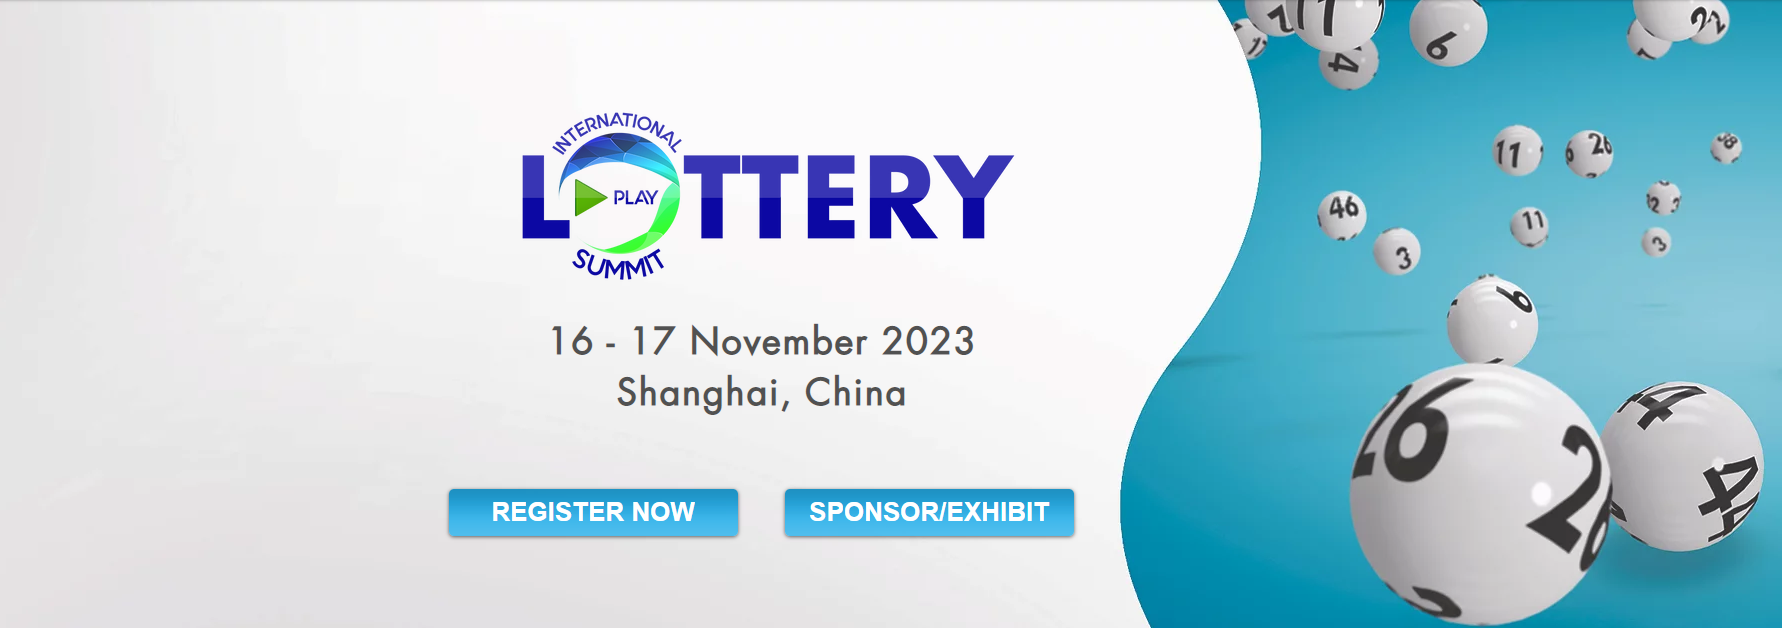 international-lottery-play-summit-banner